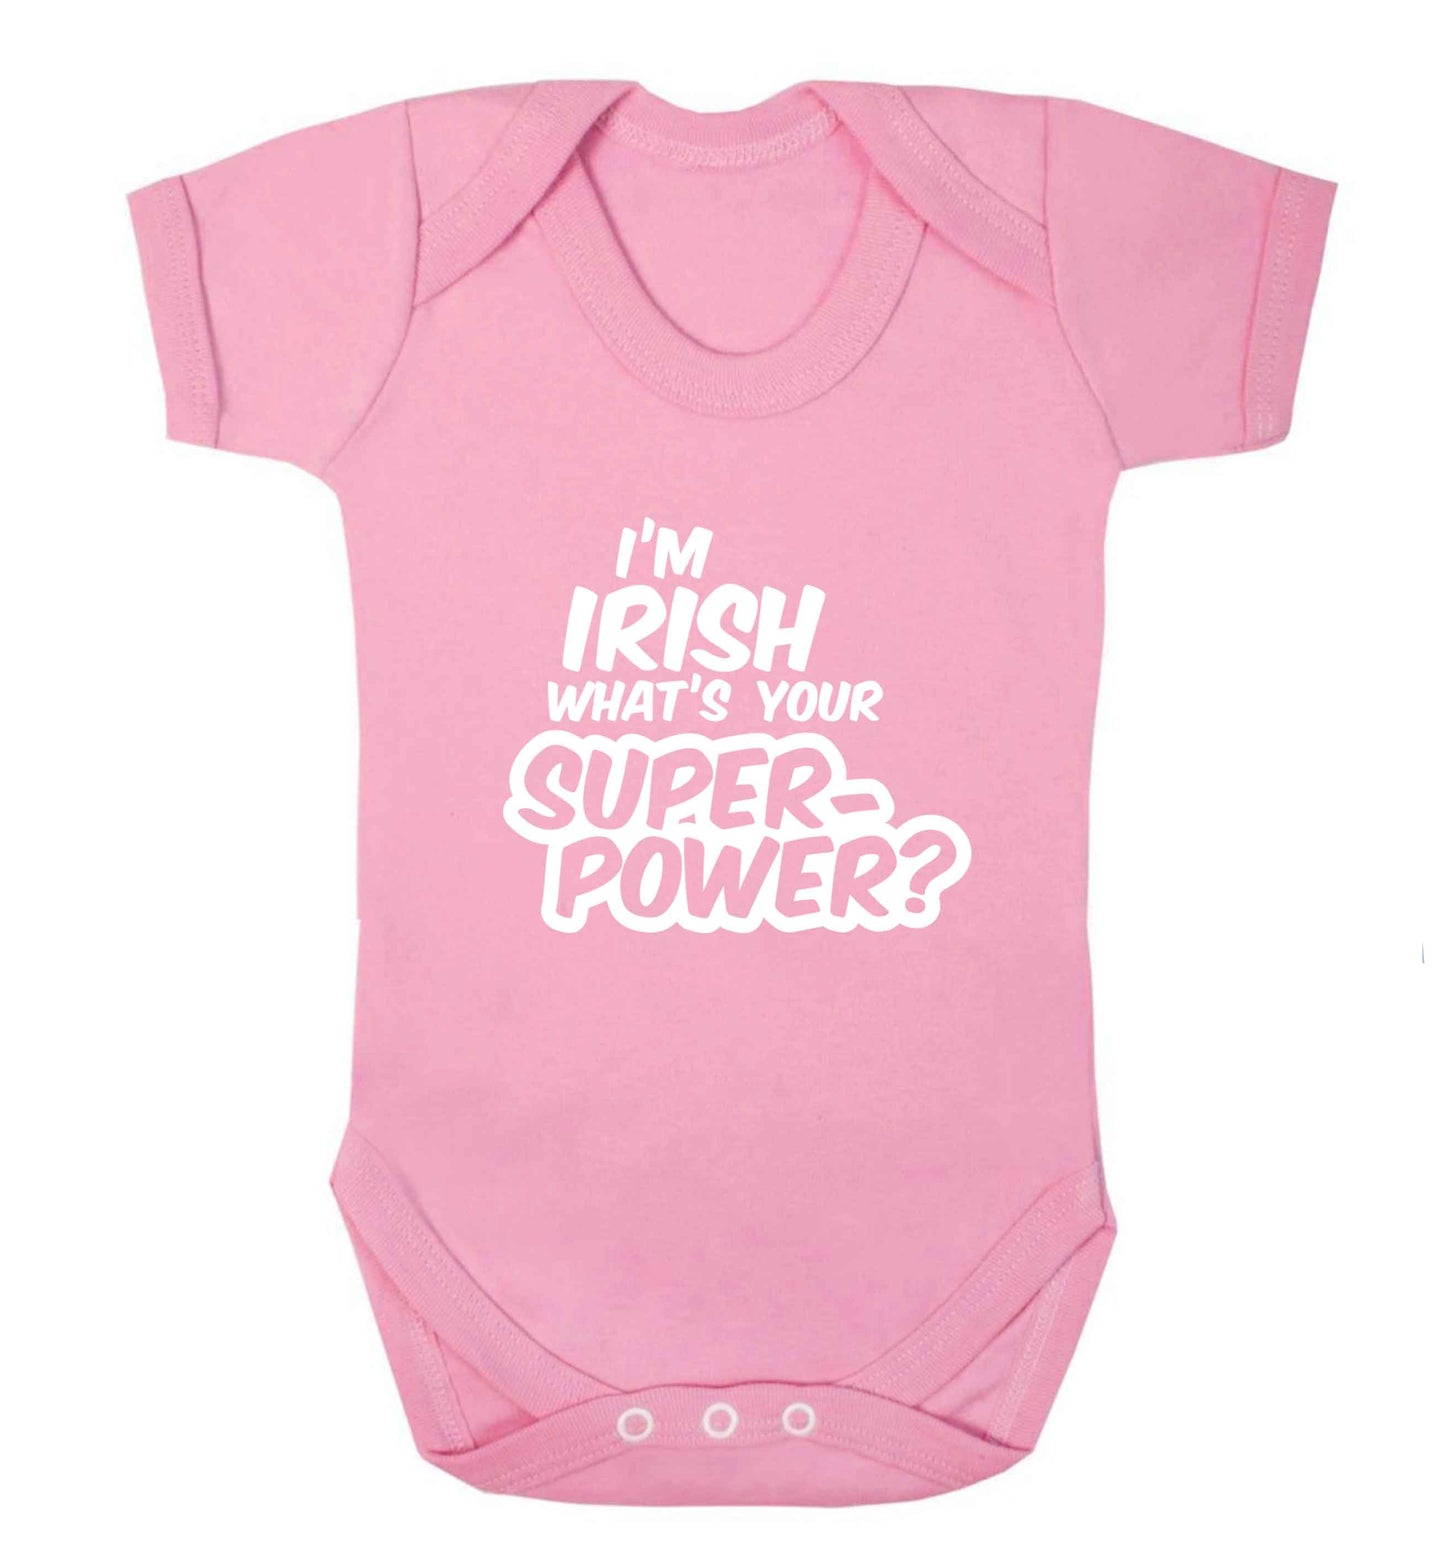 I'm Irish what's your superpower? baby vest pale pink 18-24 months